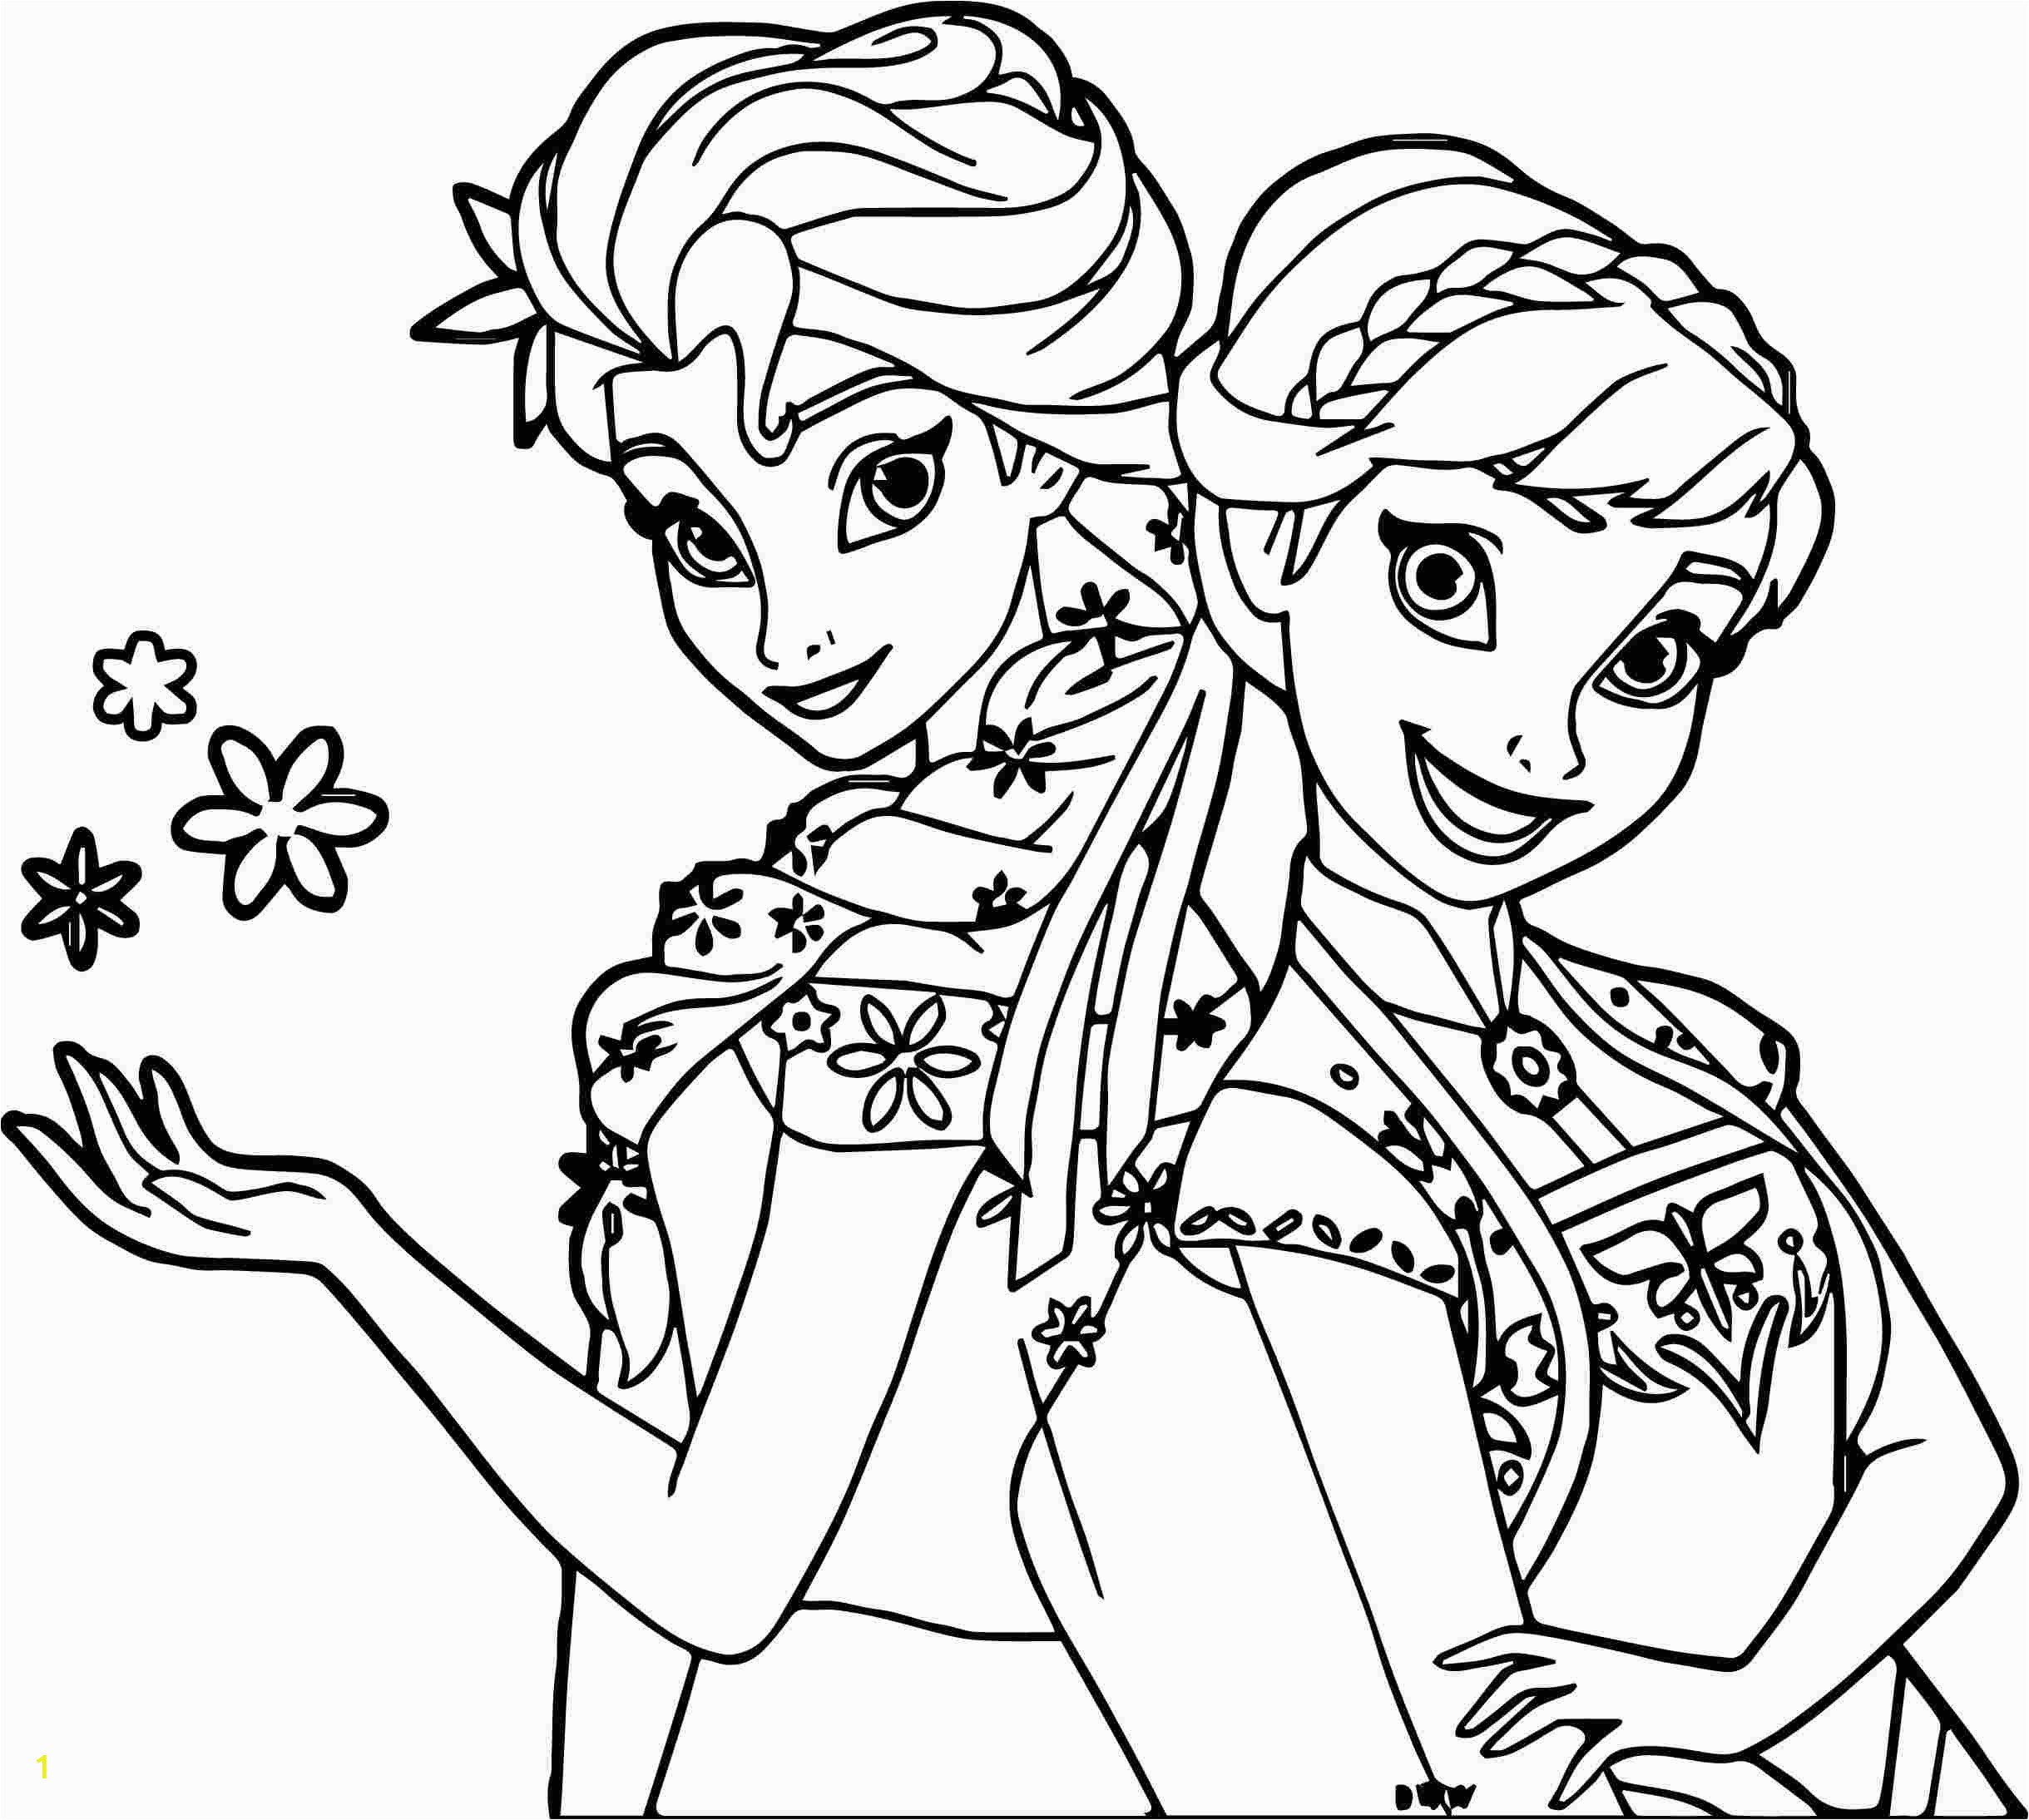 Frozen Fever Elsa and Anna Coloring Pages Elsa and Anna Frozen Fever Coloring Pages Anna Elsa